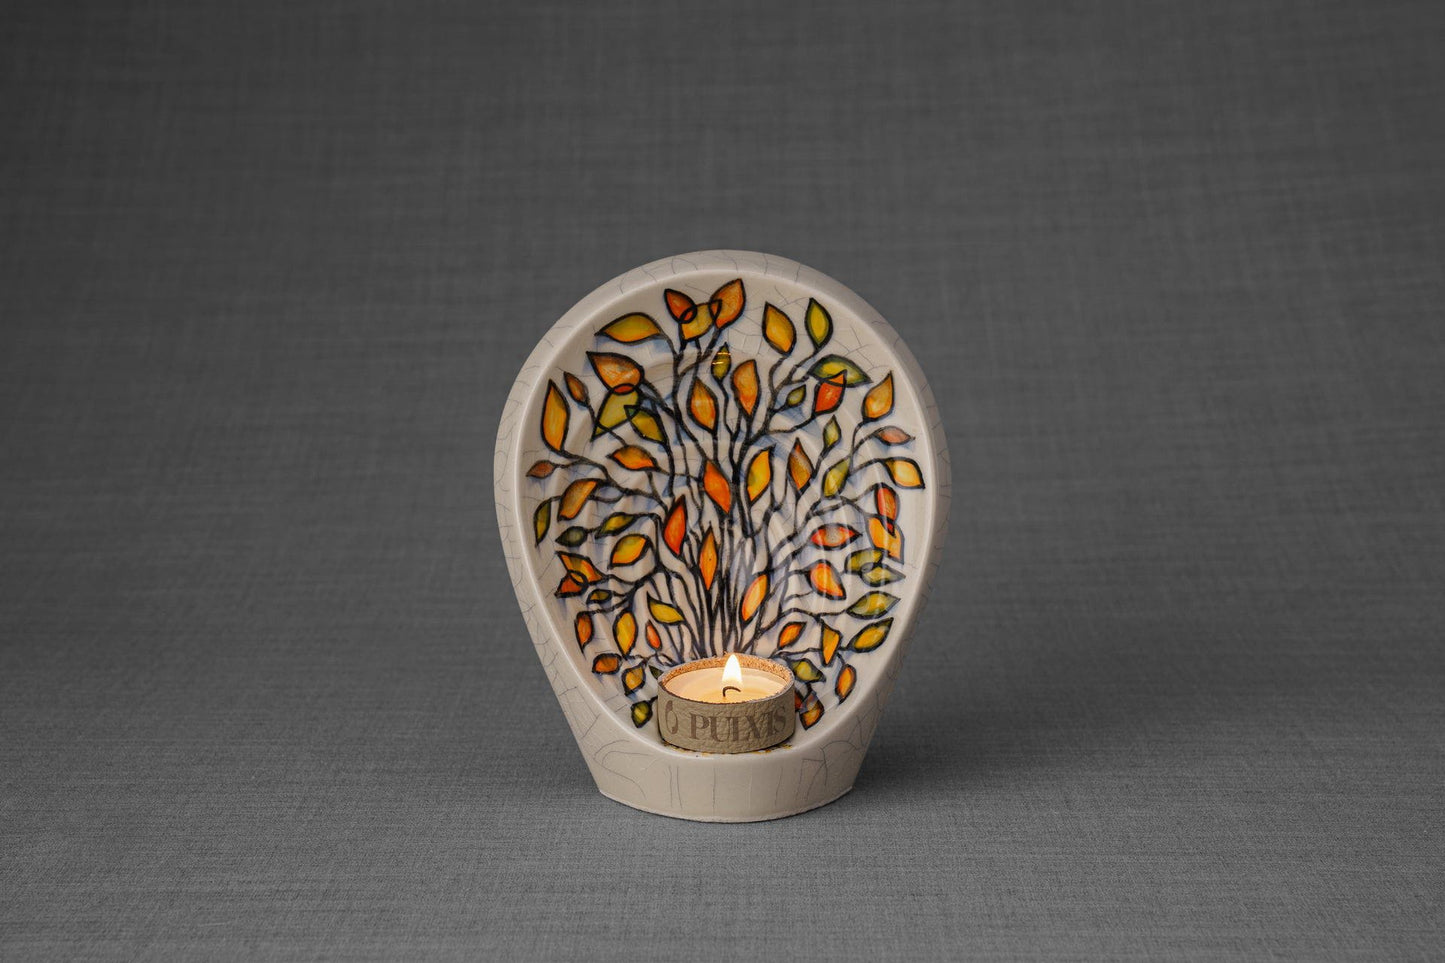 Pulvis Art Urns Exclusive Urn Hand Decorated Keepsake "Guardian - Autumn" - Ceramic Keepsake Urn